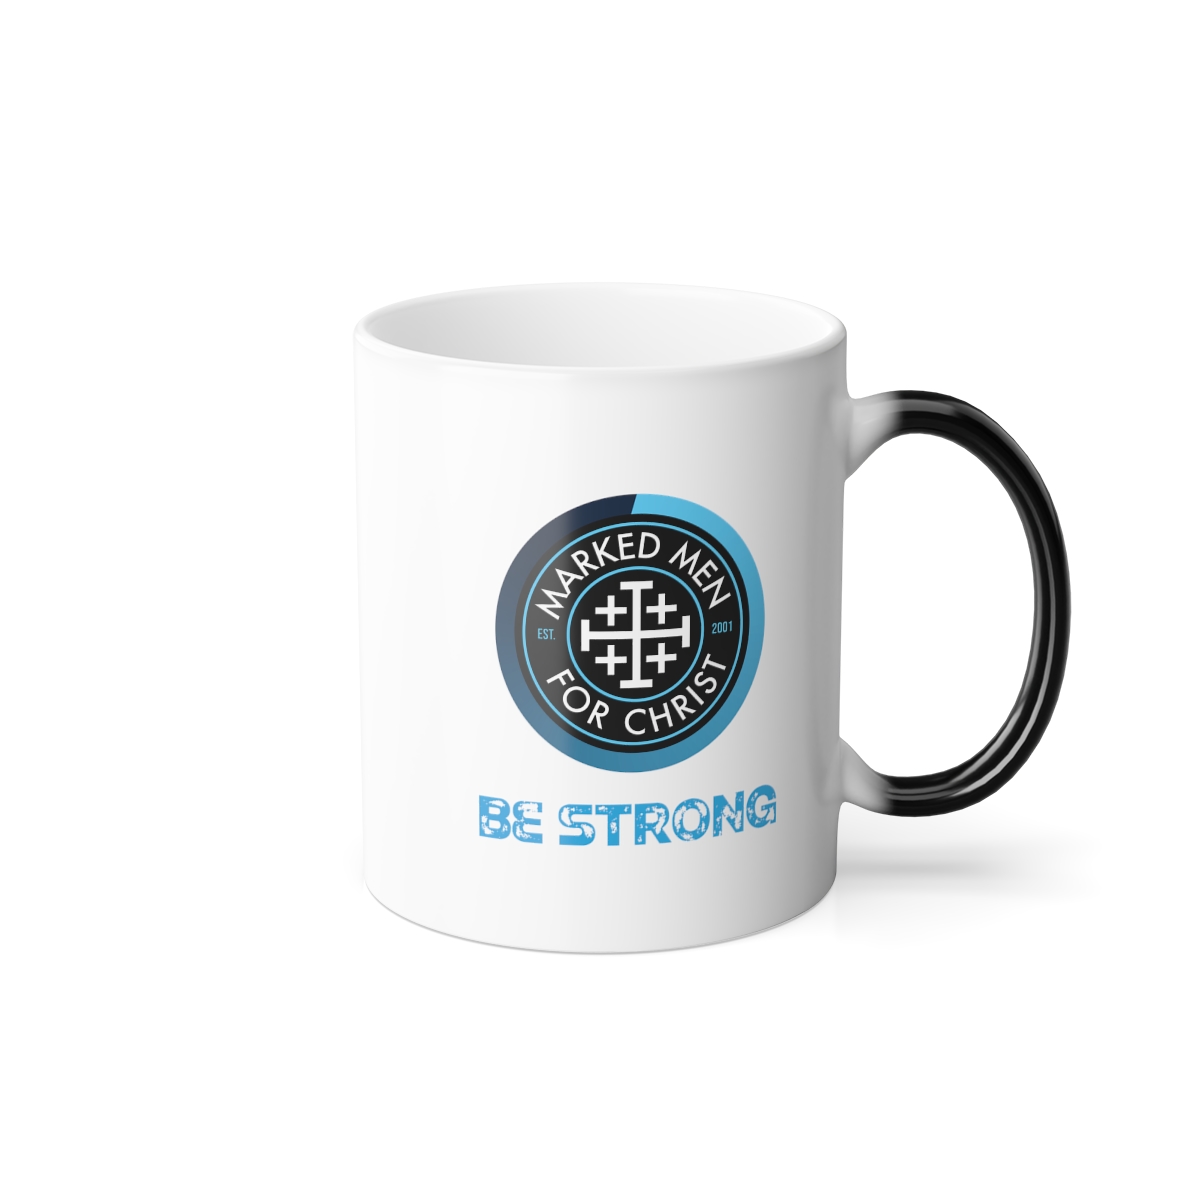 Be STRONG” Color Morphing Mug, 11oz – Marked Men For Christ